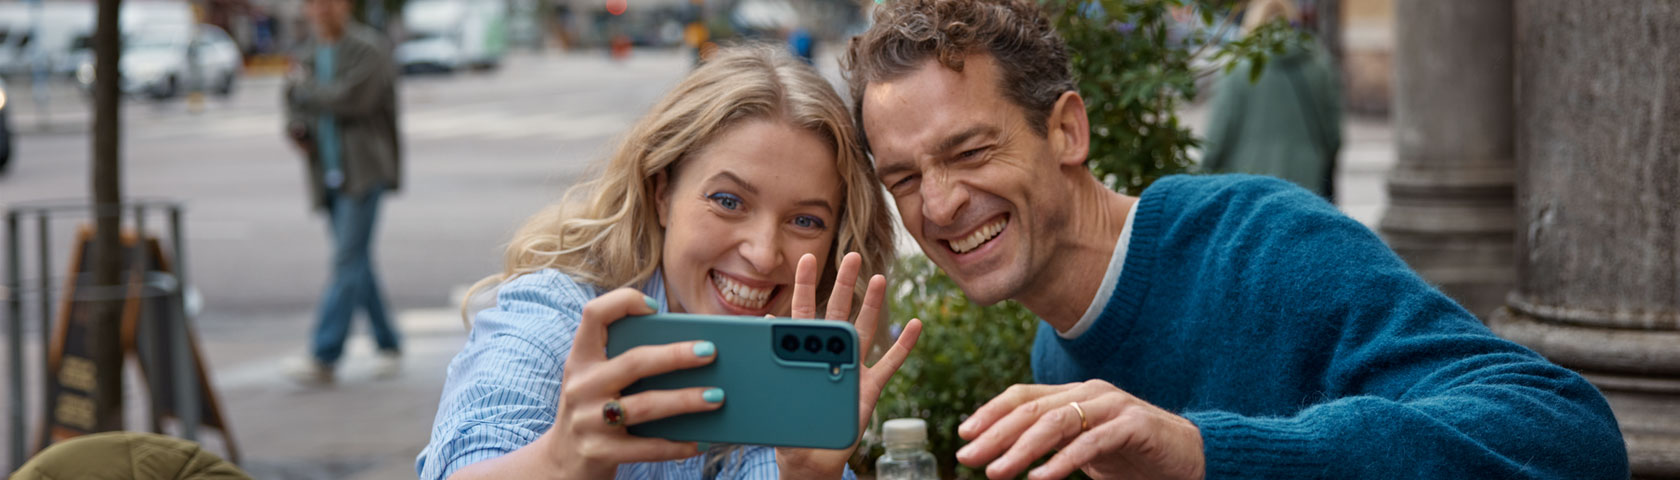 en dame og en mann ser på mobil